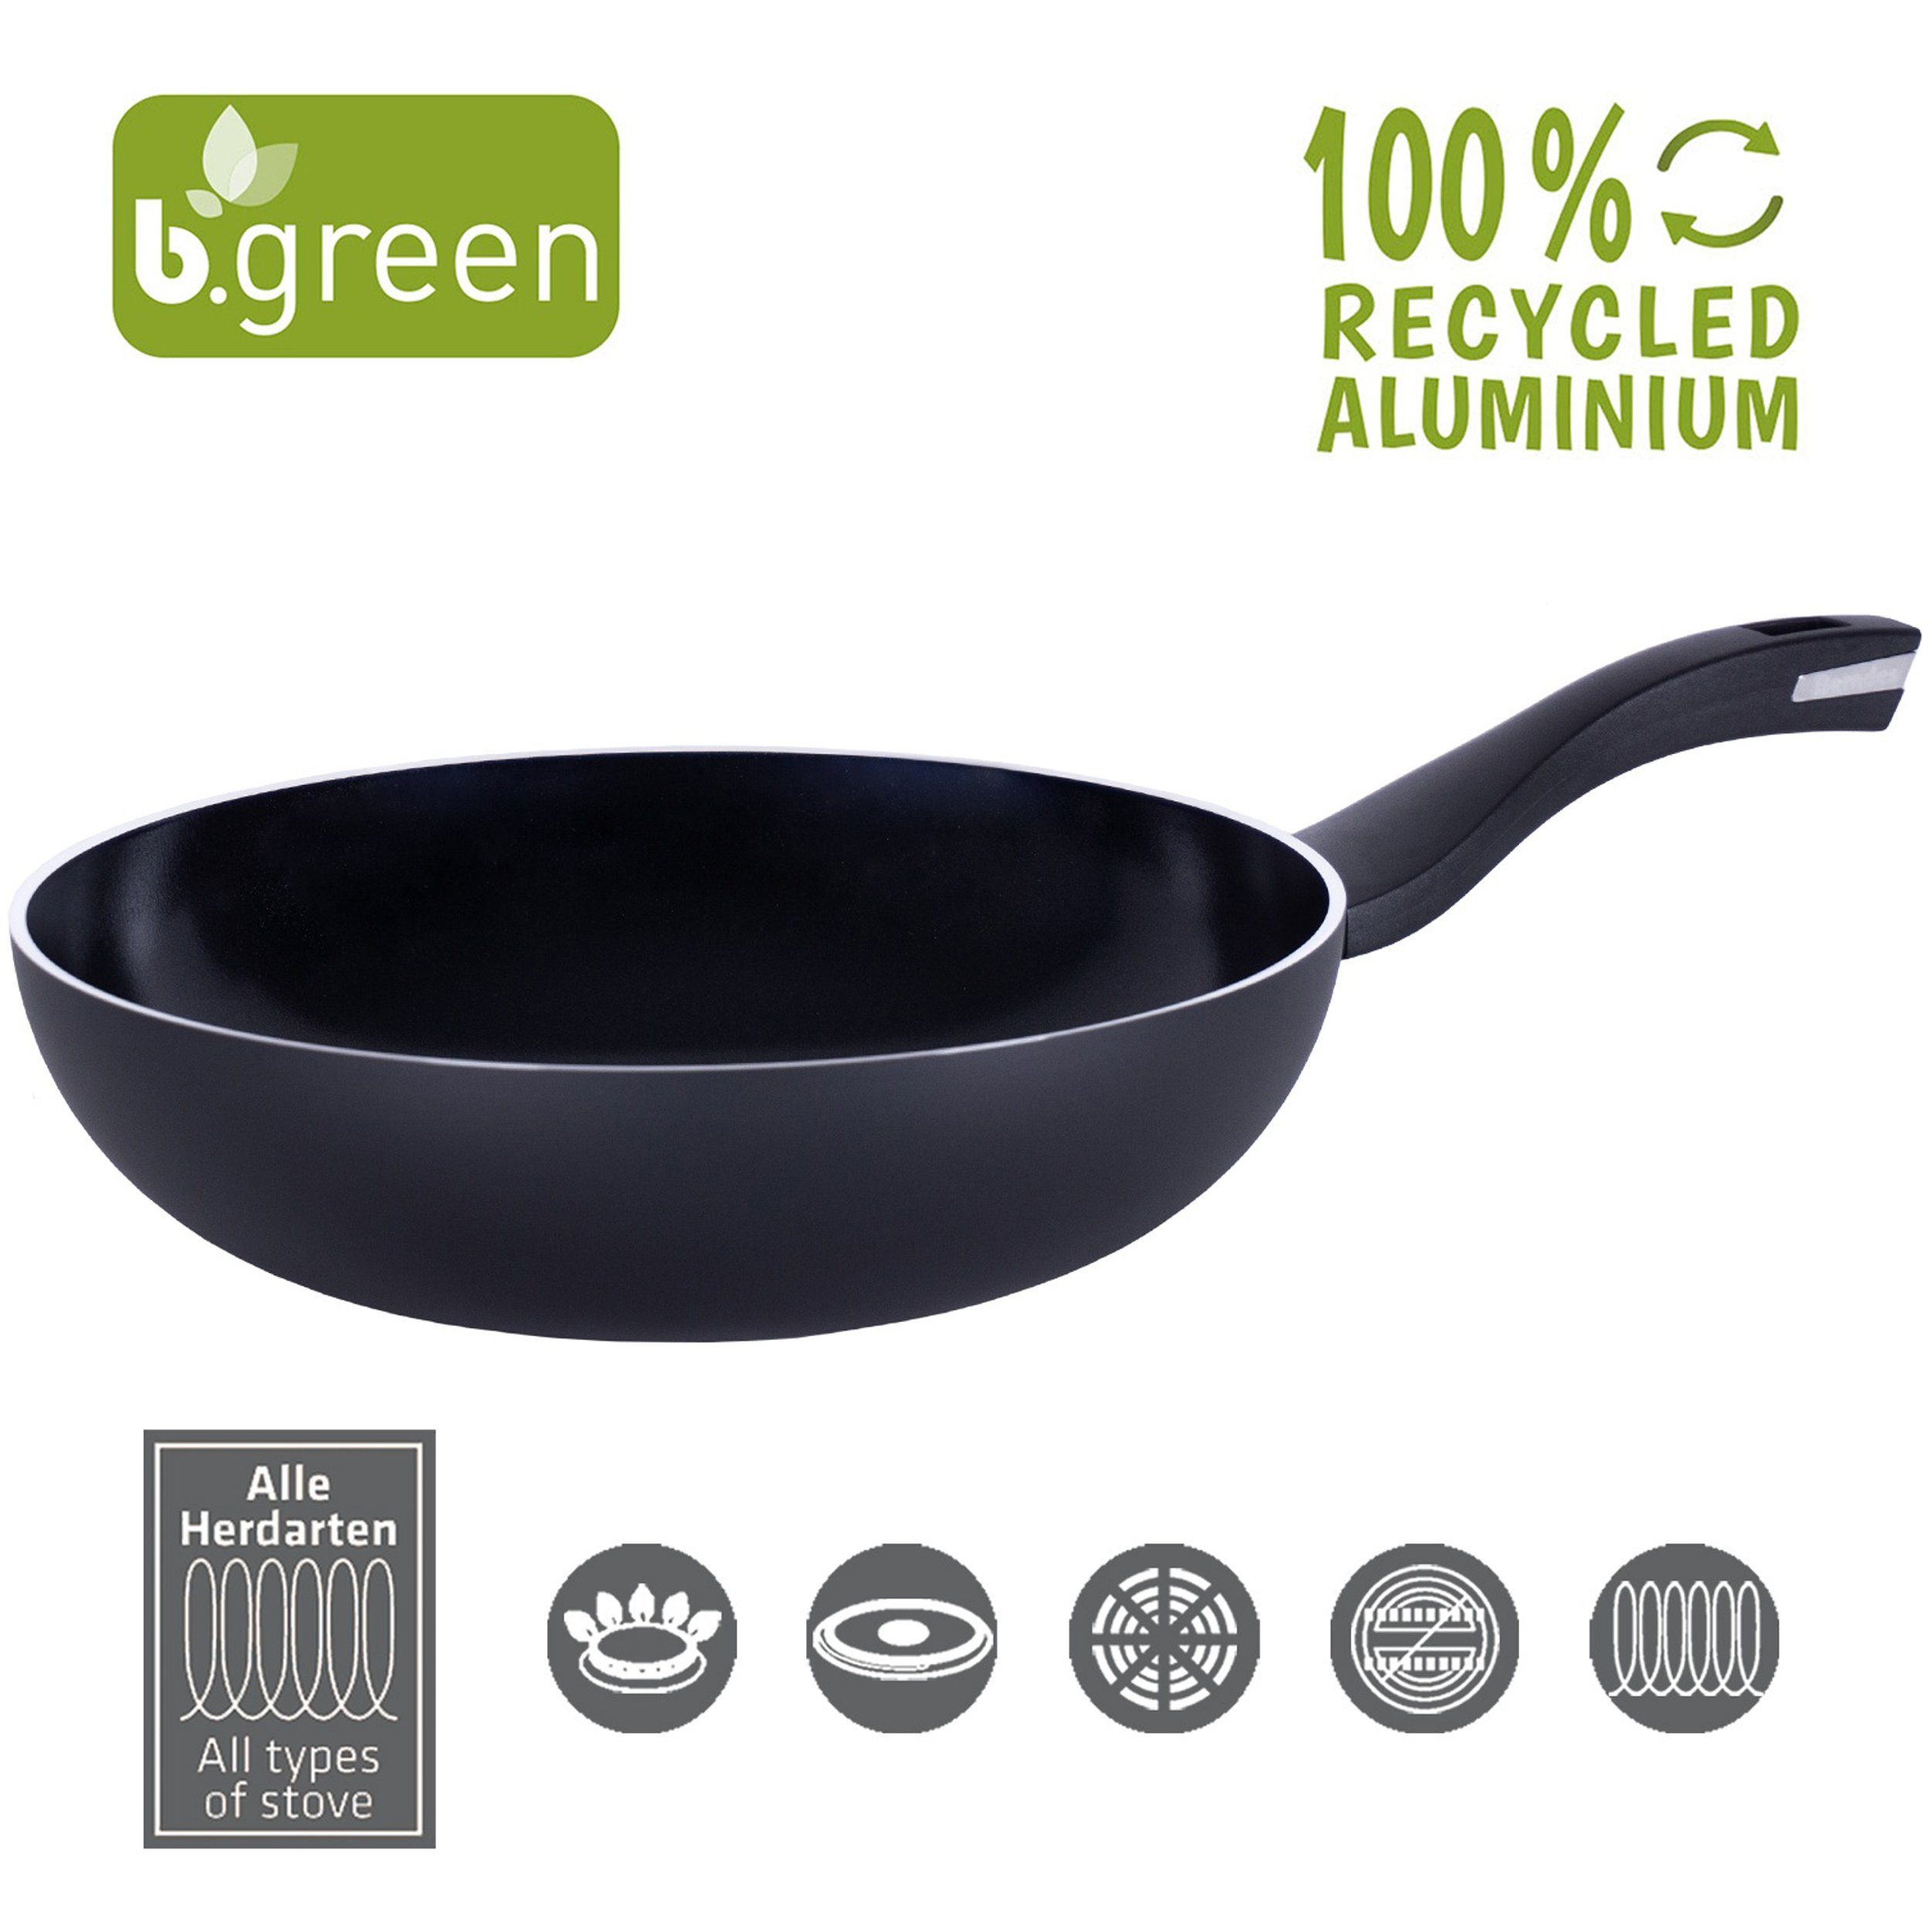 Berndes Wok Asiawok Pfanne 100 Dosen b.green Aluminium, % recycelten Aus 28 cm Induktionsgeeignet